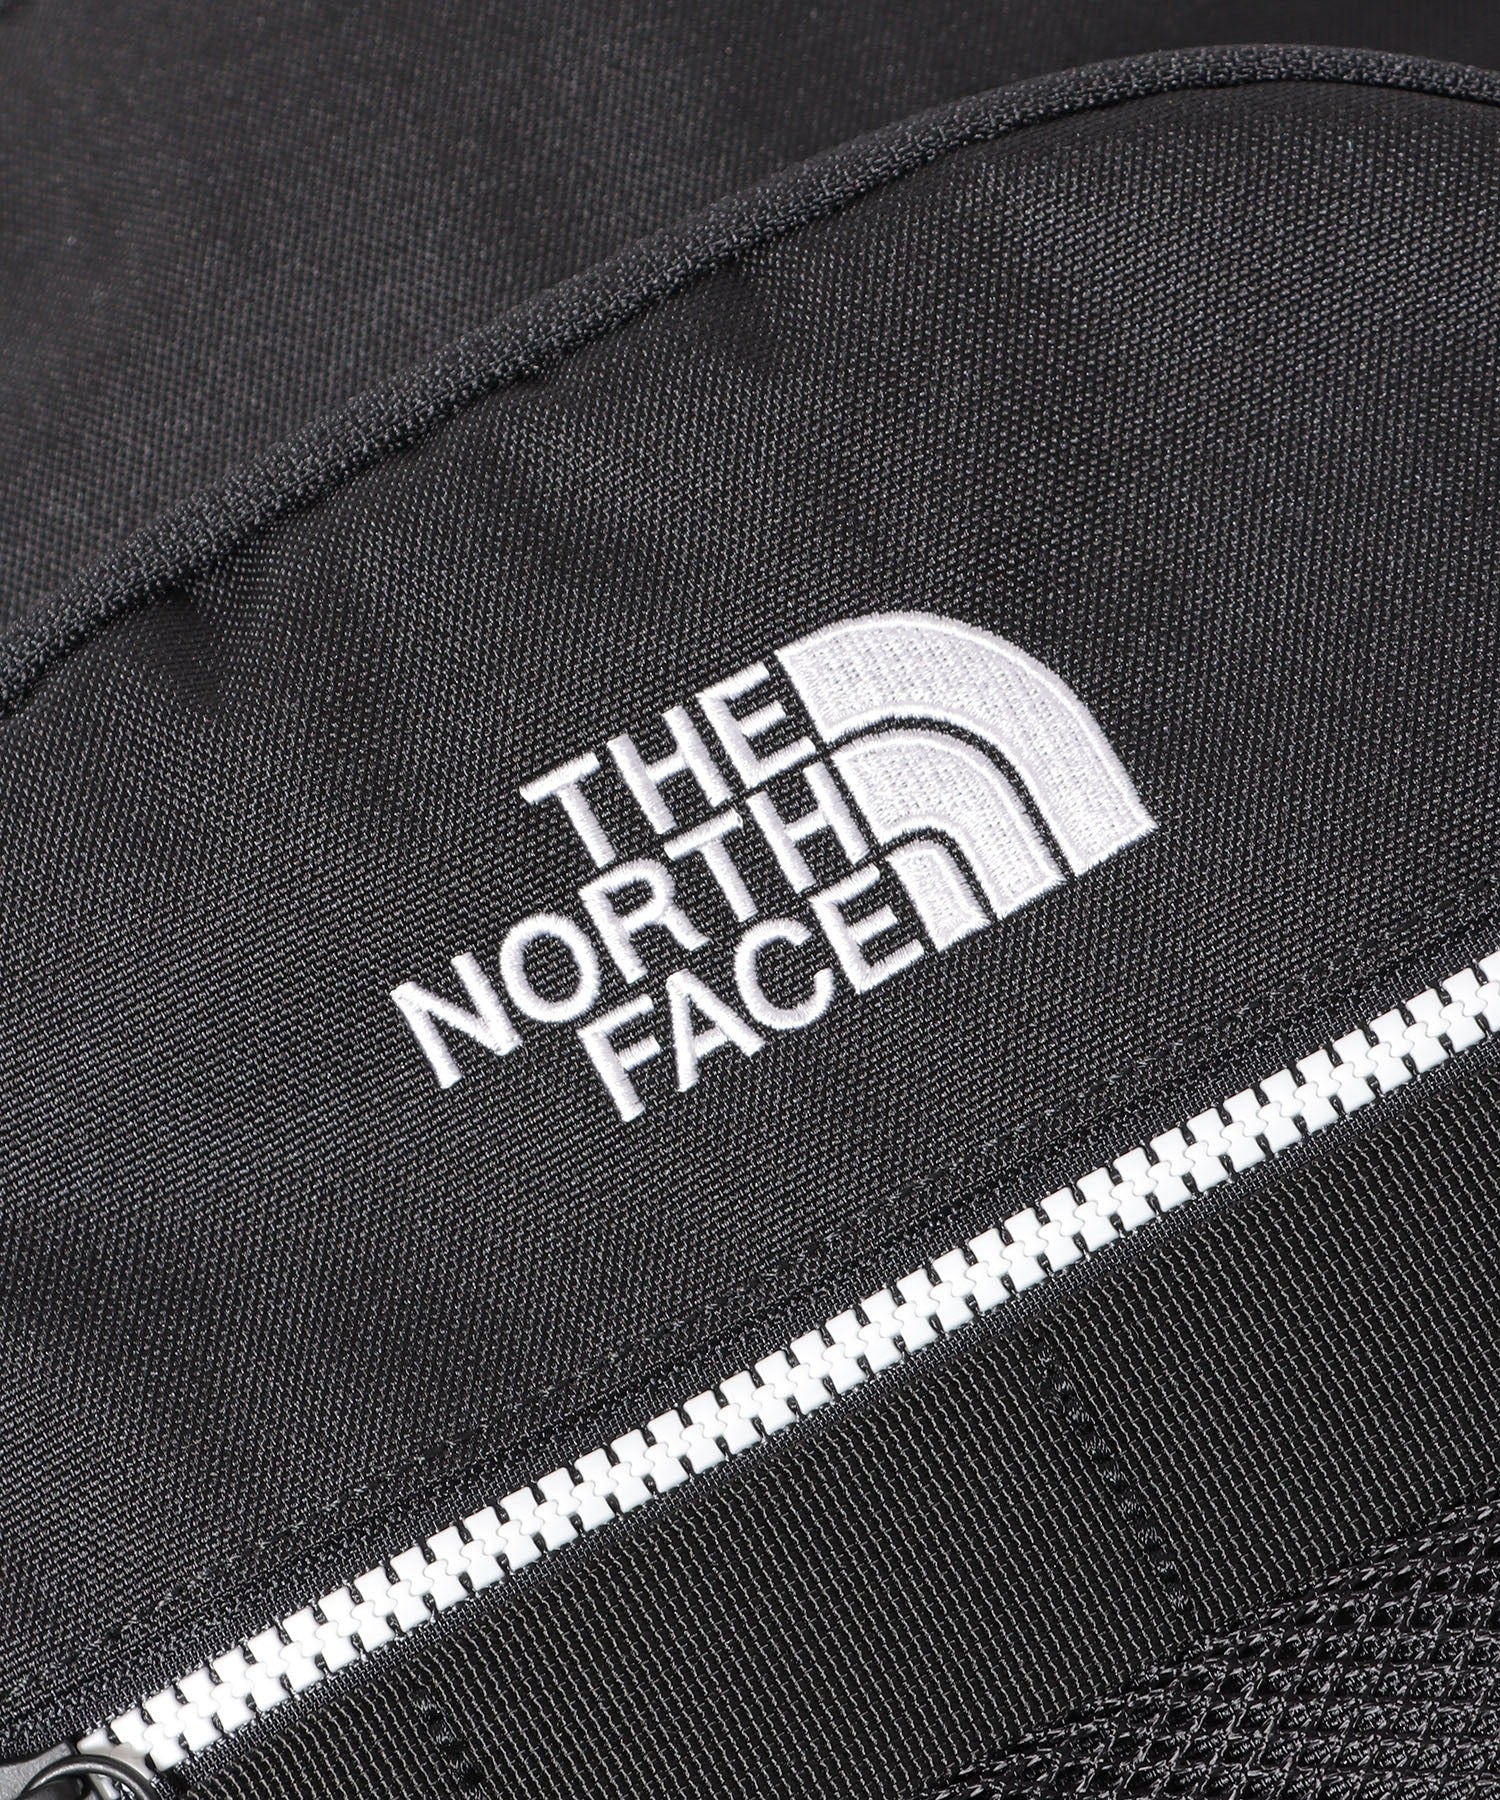 THE NORTH FACE/ザ・ノースフェイス JR. Light Sch Pack